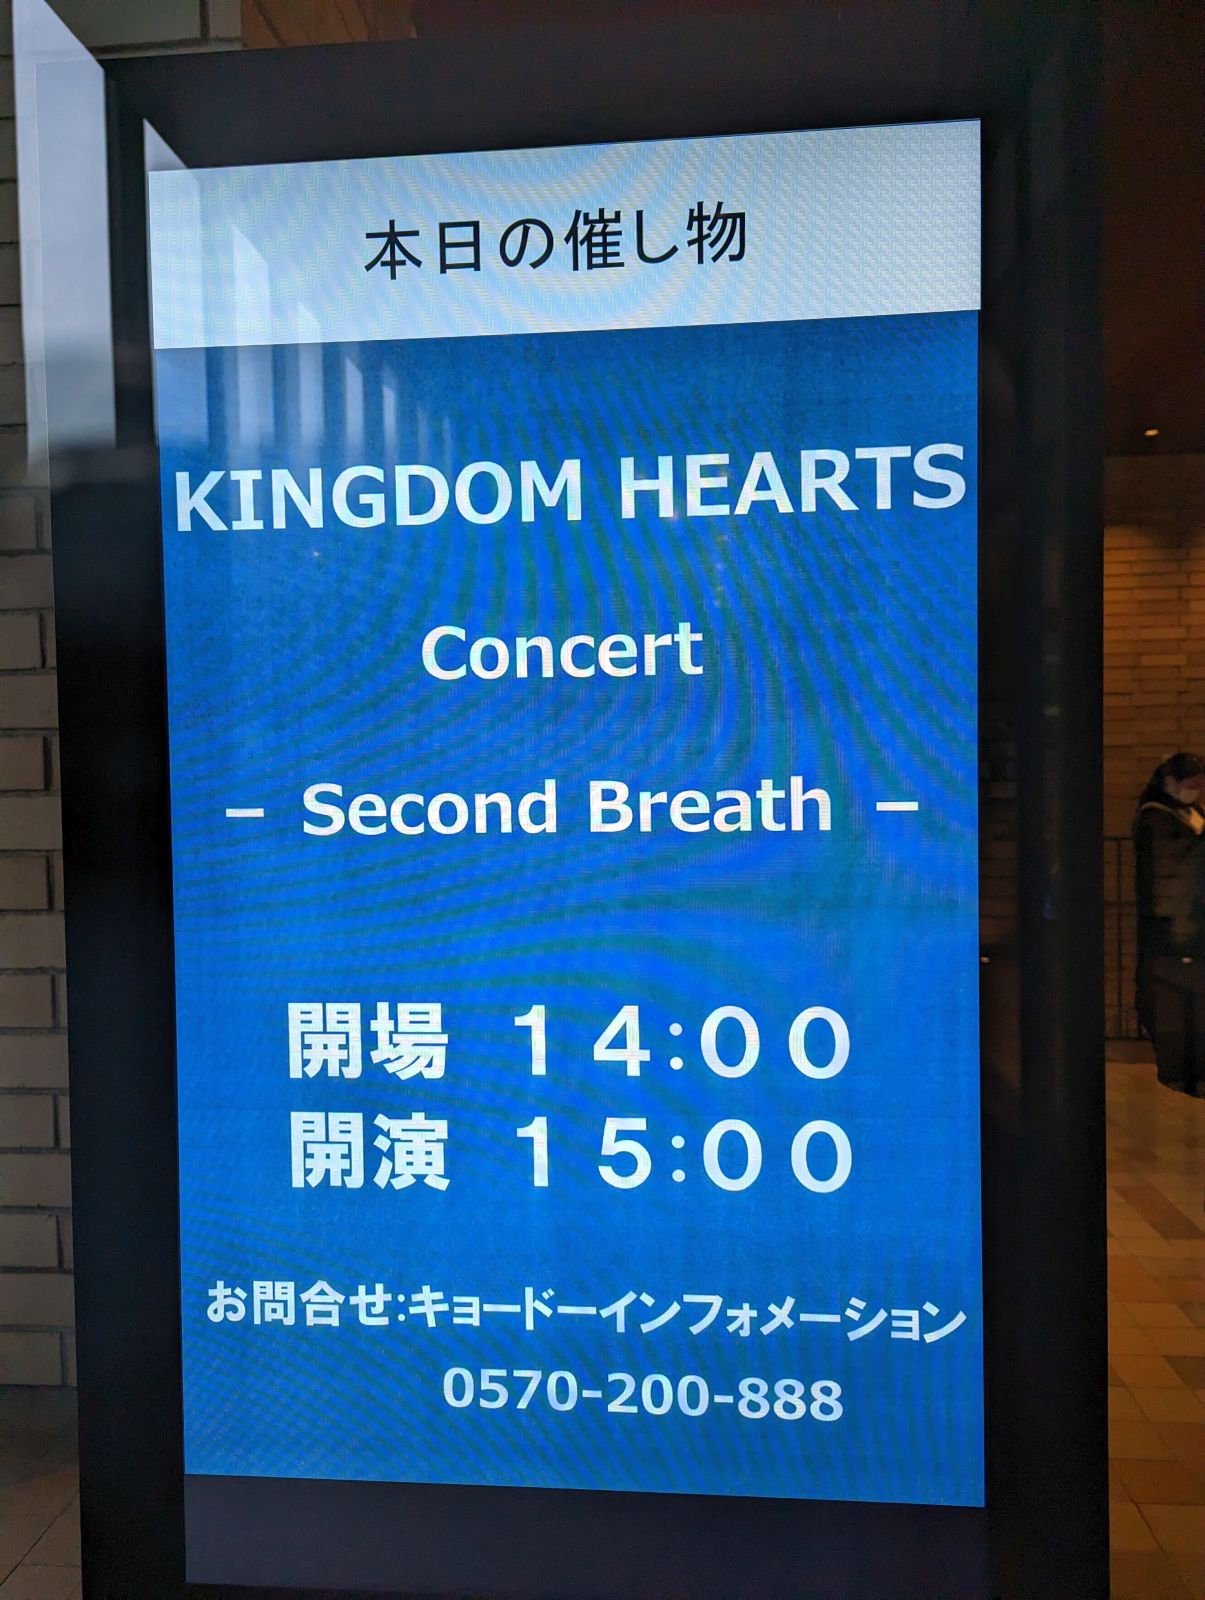 KINGDOM HEARTS Concert